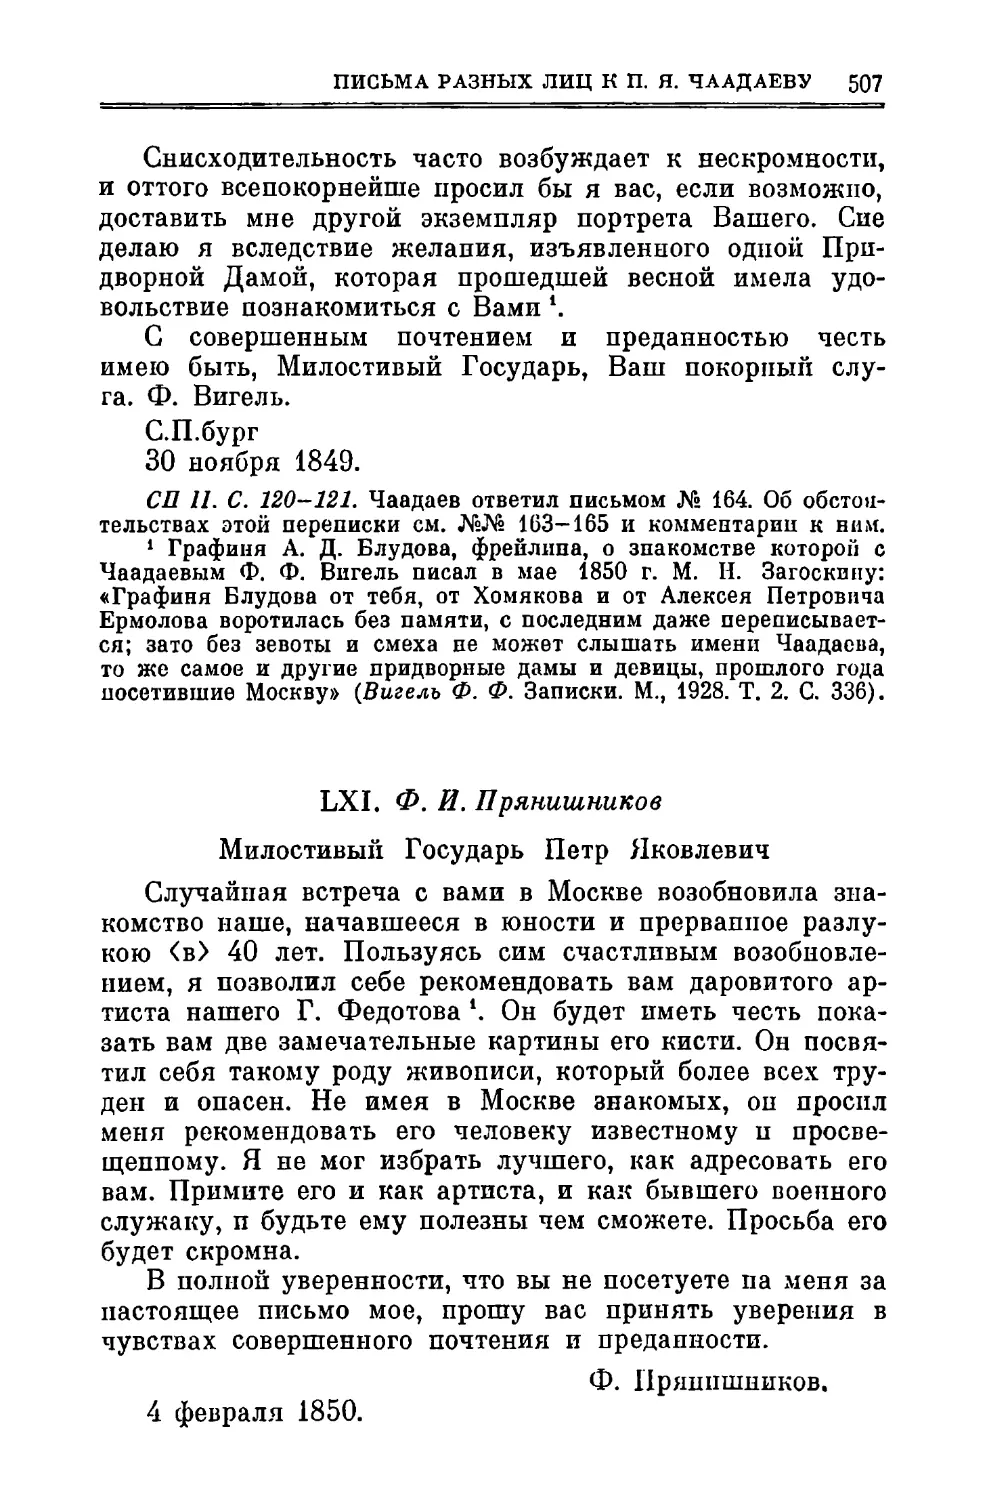 LXI. Прянишников Ф.И. 4.11.1850